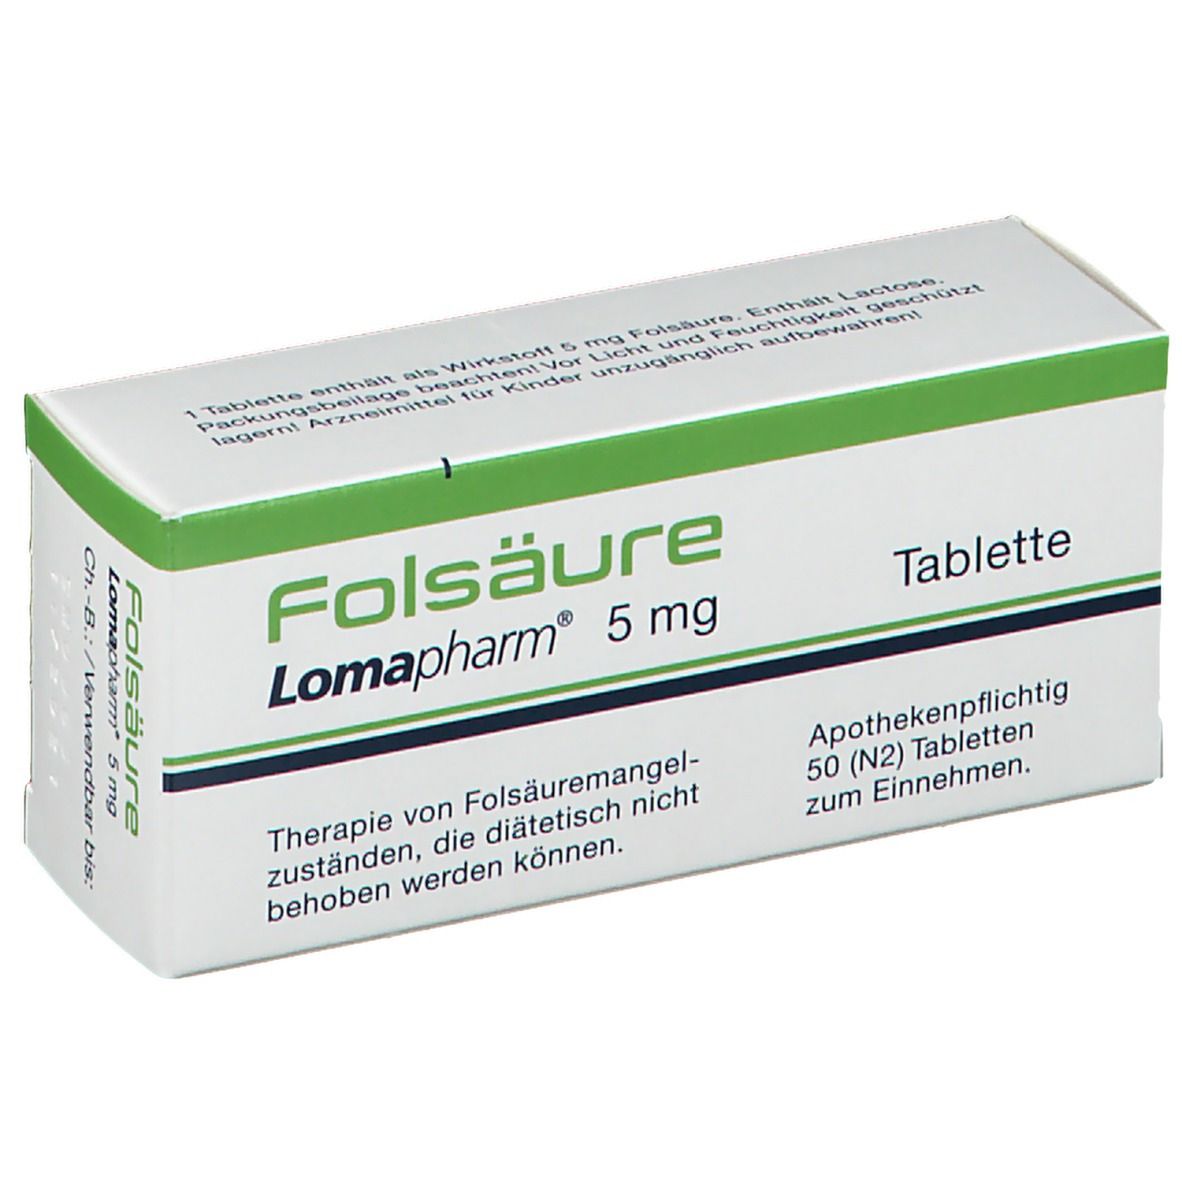 Folsäure Lomapharm® 5 mg Tabletten